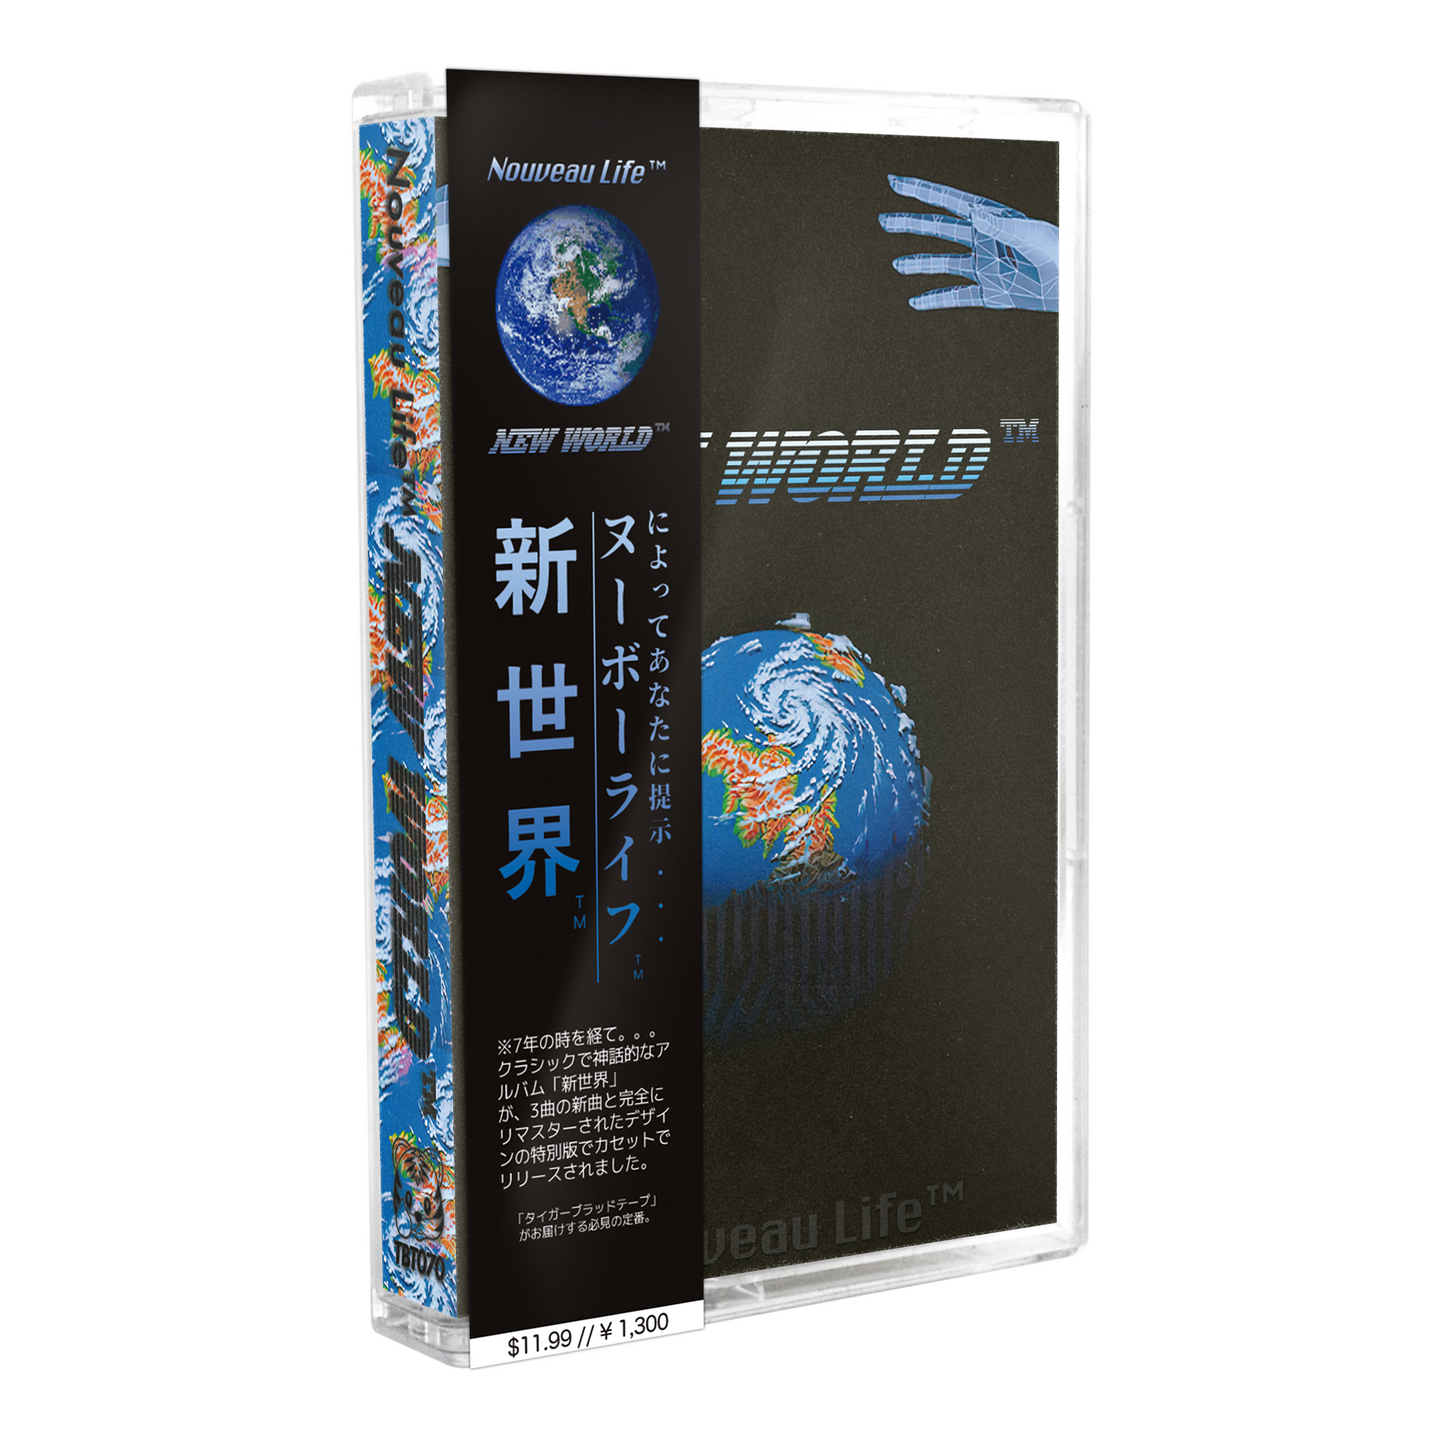 Nouveau Life™ - "New World™" Limited Edition Cassette Tape